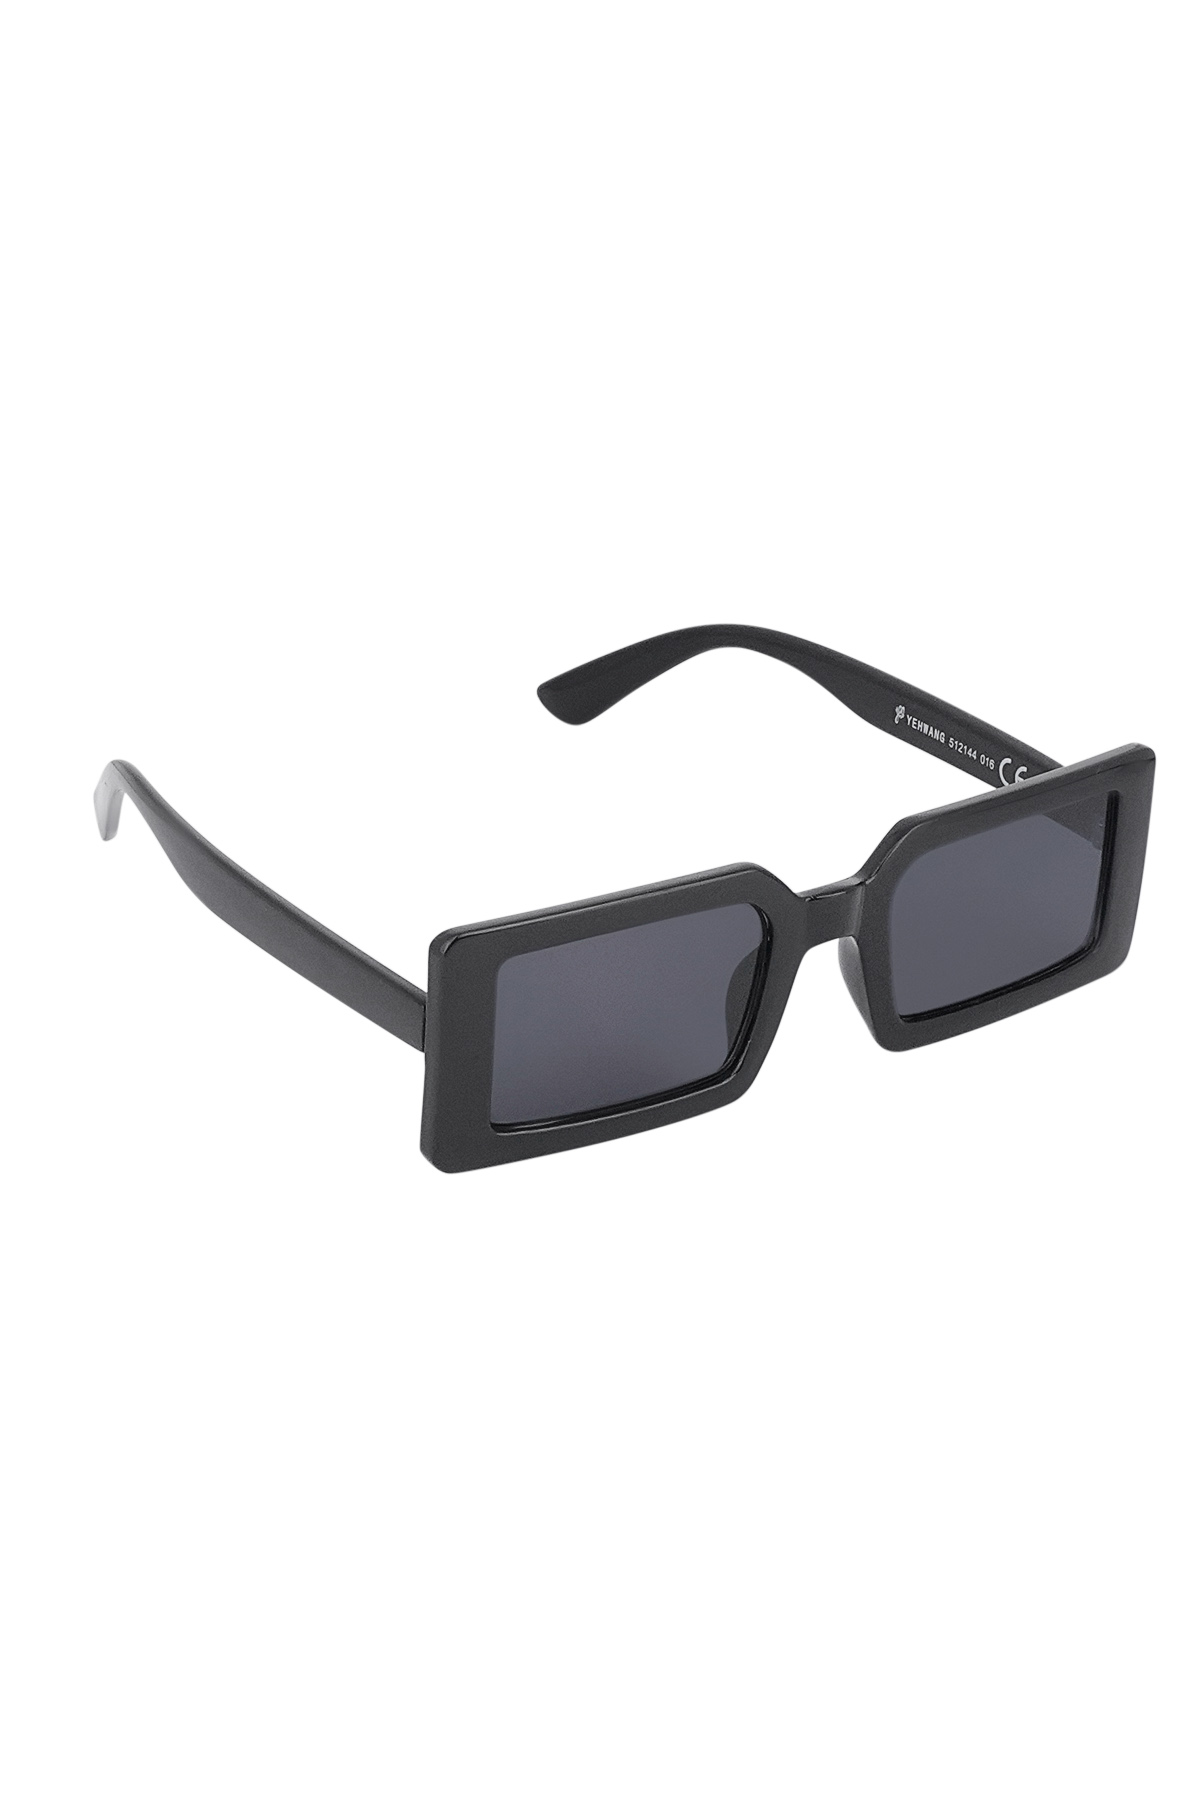 Shimmerglow sunglasses - black